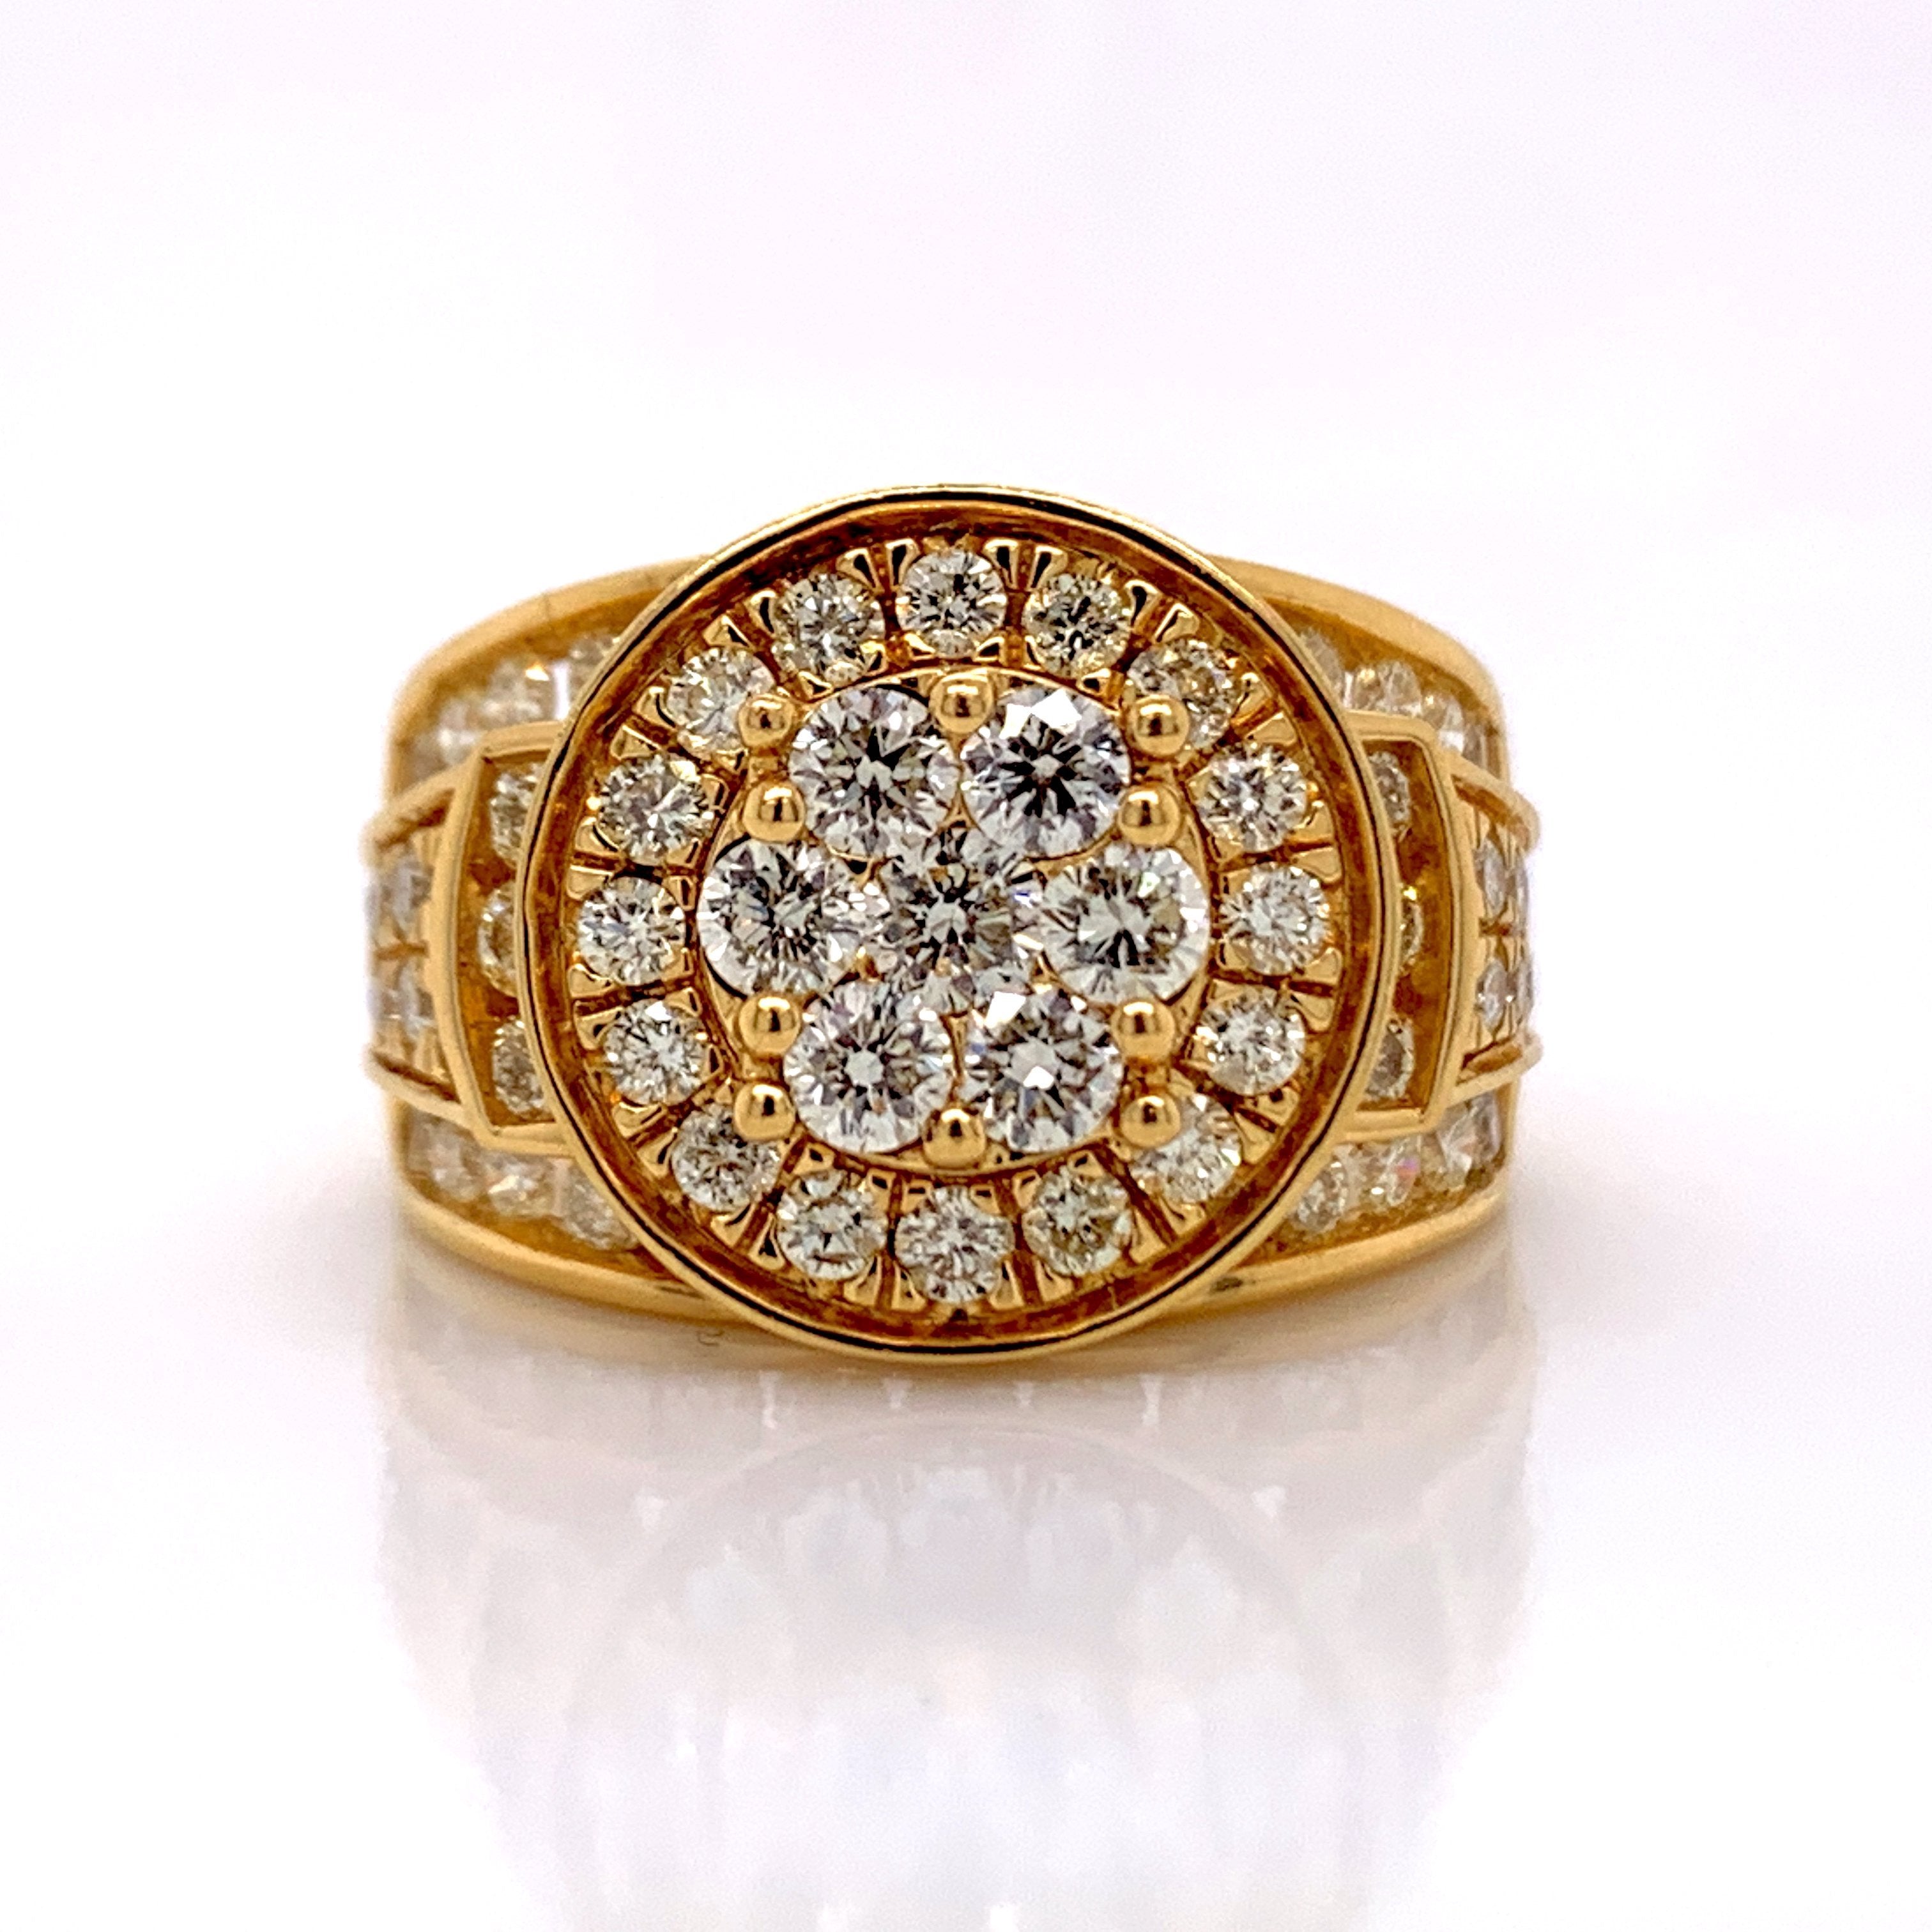 2.39 CT. Diamond Ring in 10K Gold - White Carat Diamonds 